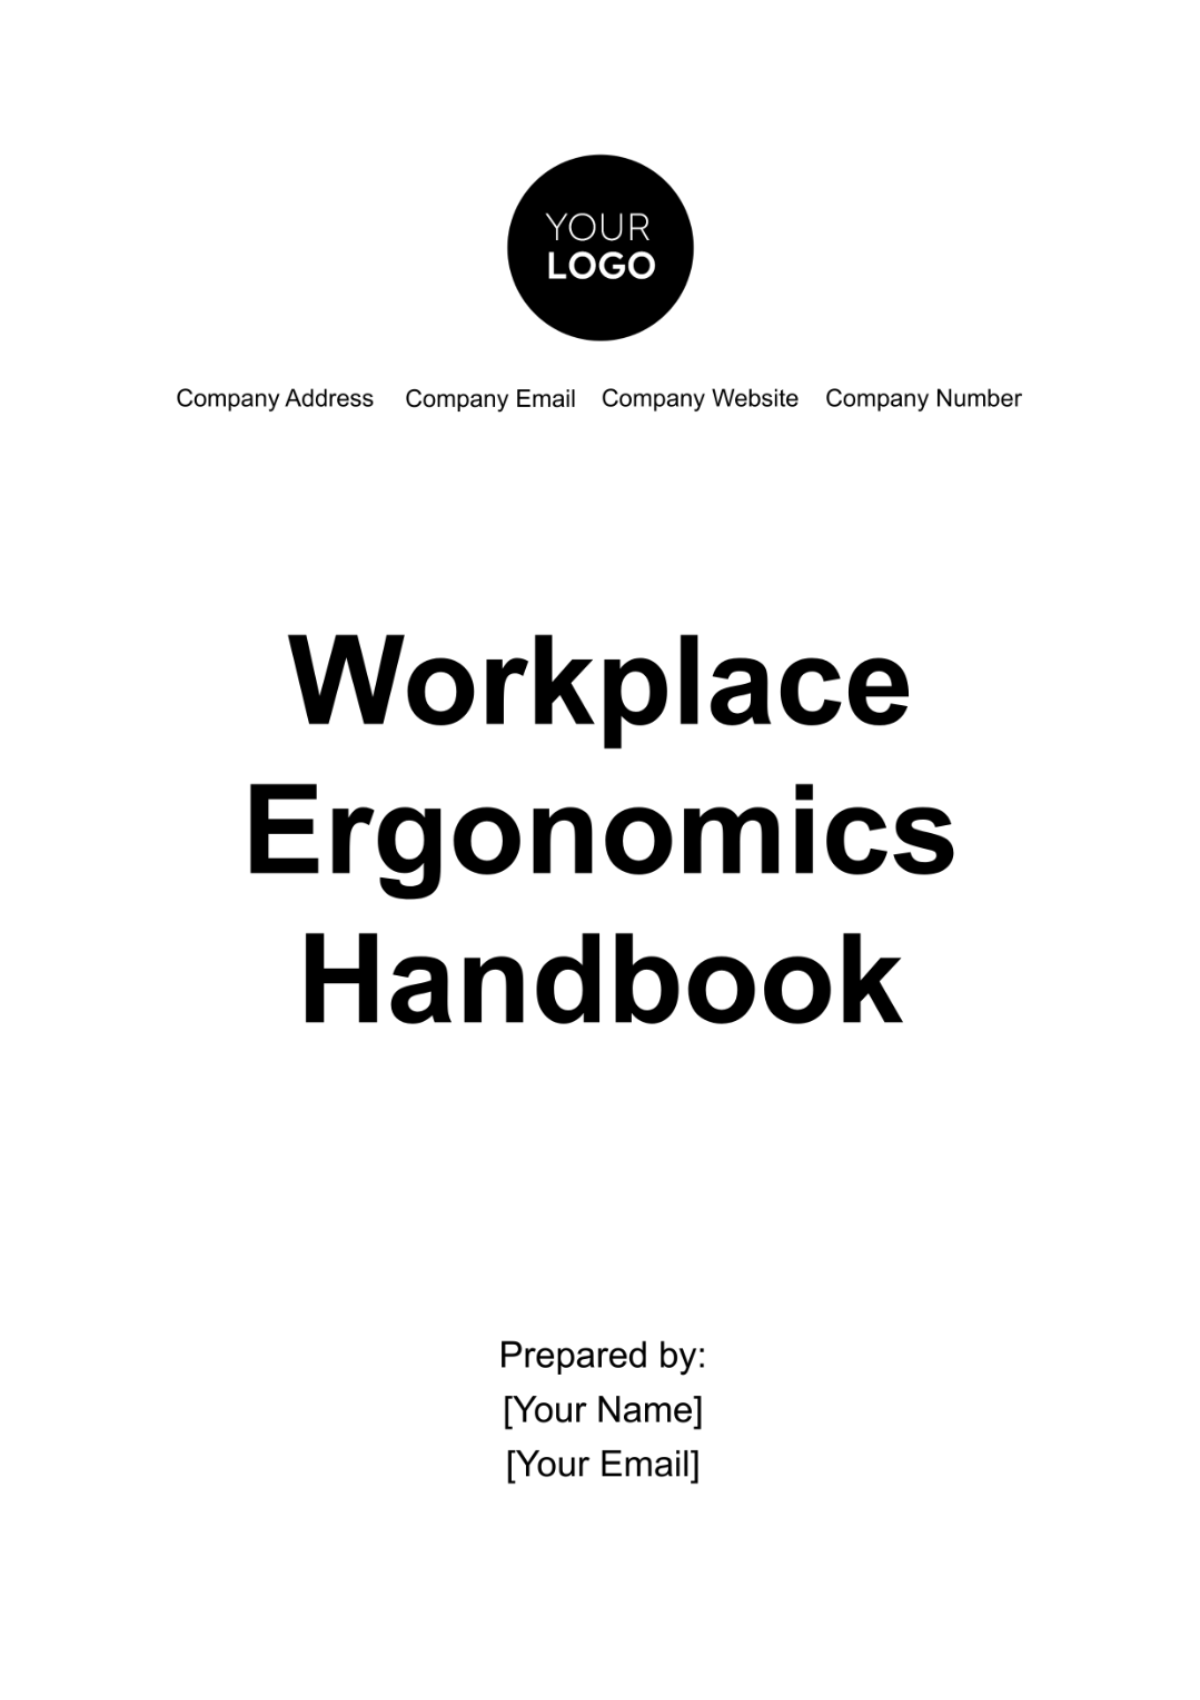 Workplace Ergonomics Handbook Template